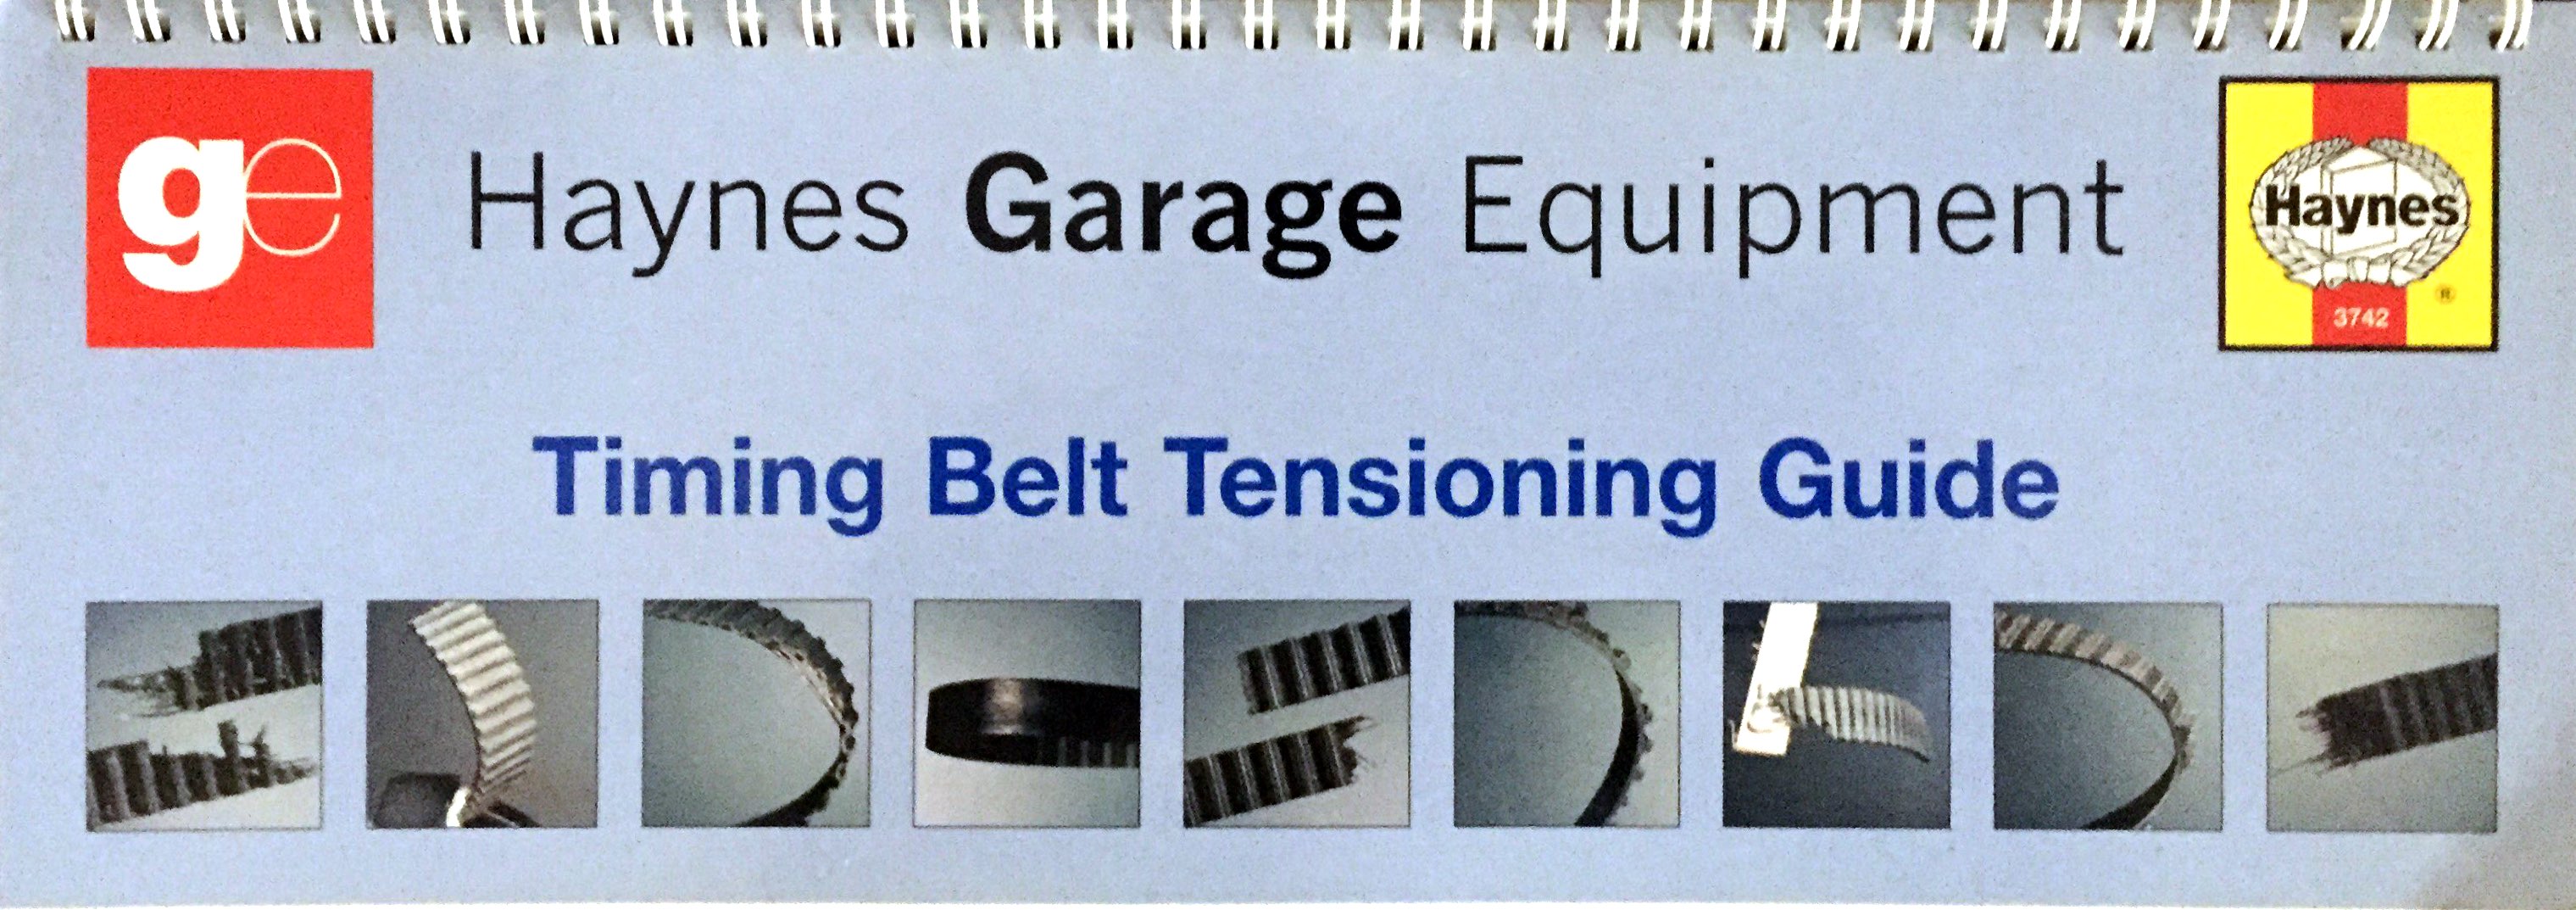 Timing Belt Tensioning Guide